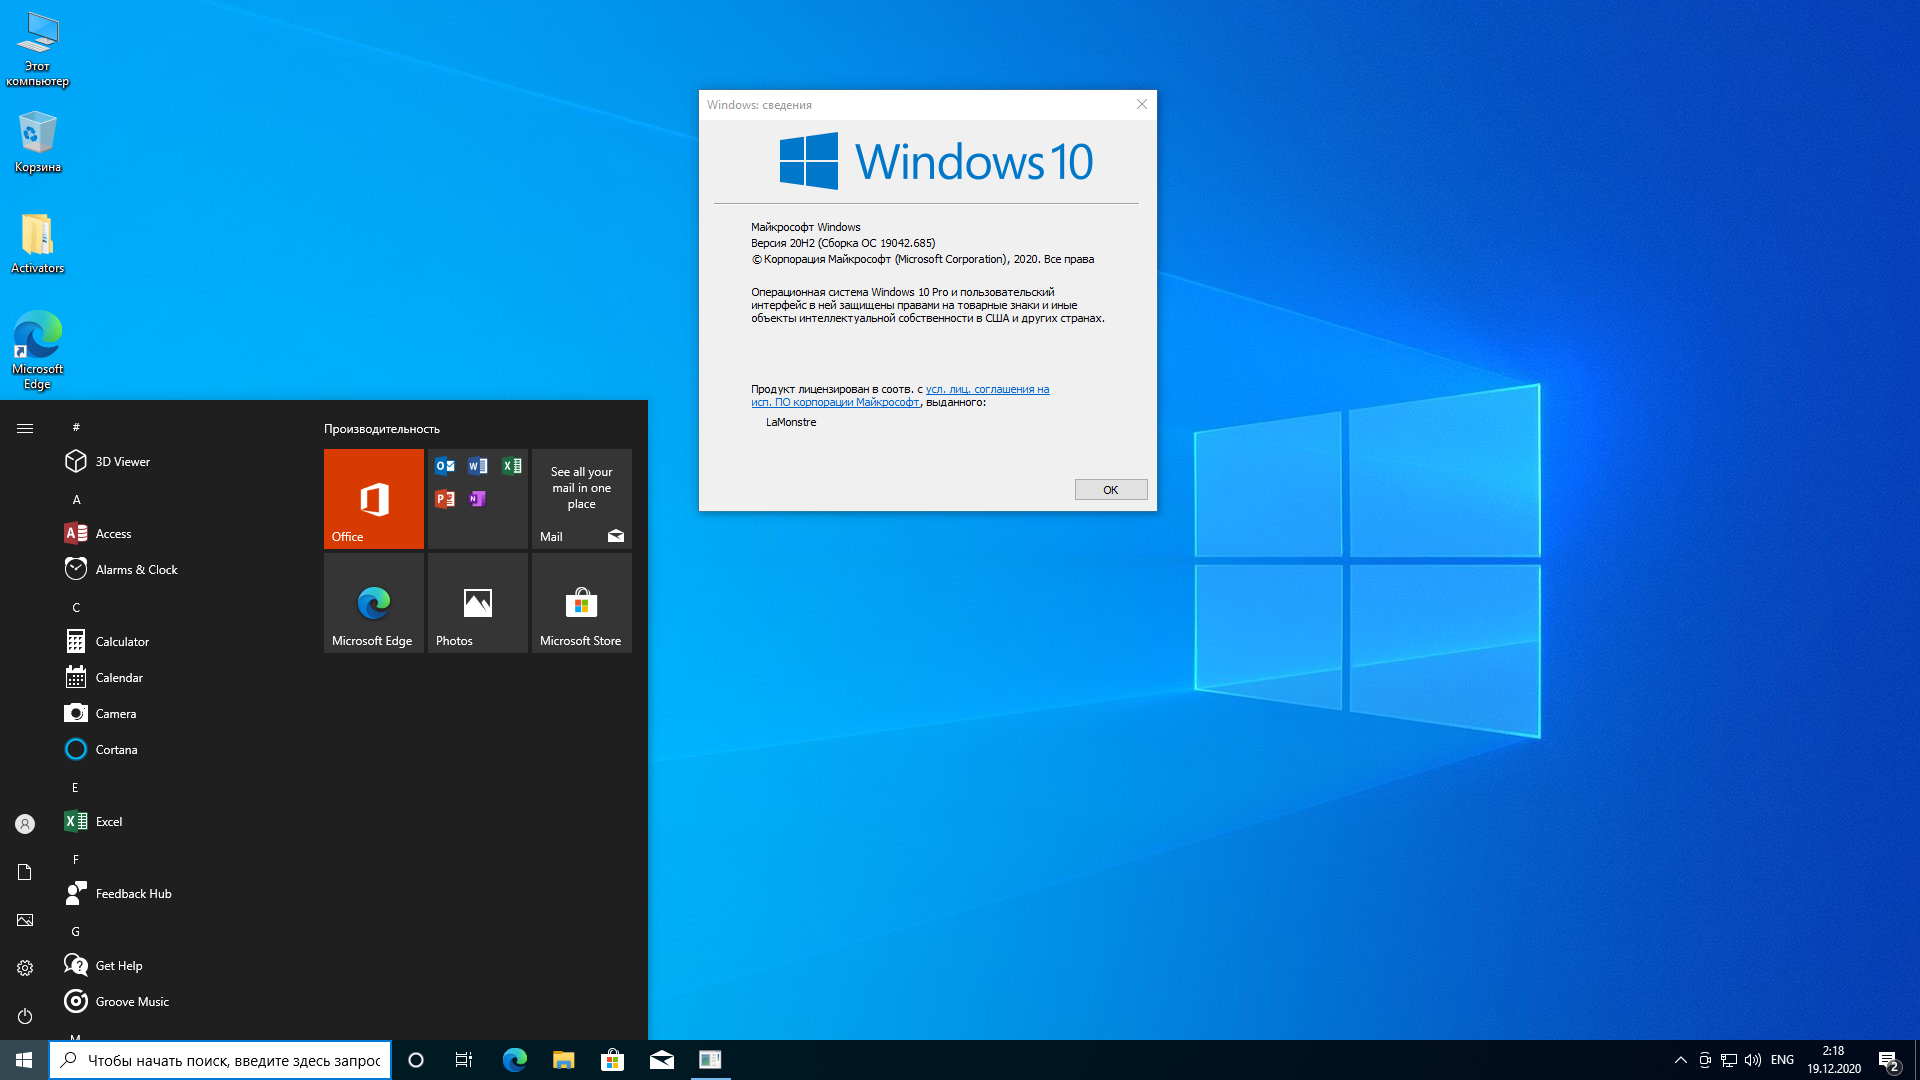 windows 10 pro 64 bit 20h2 iso download